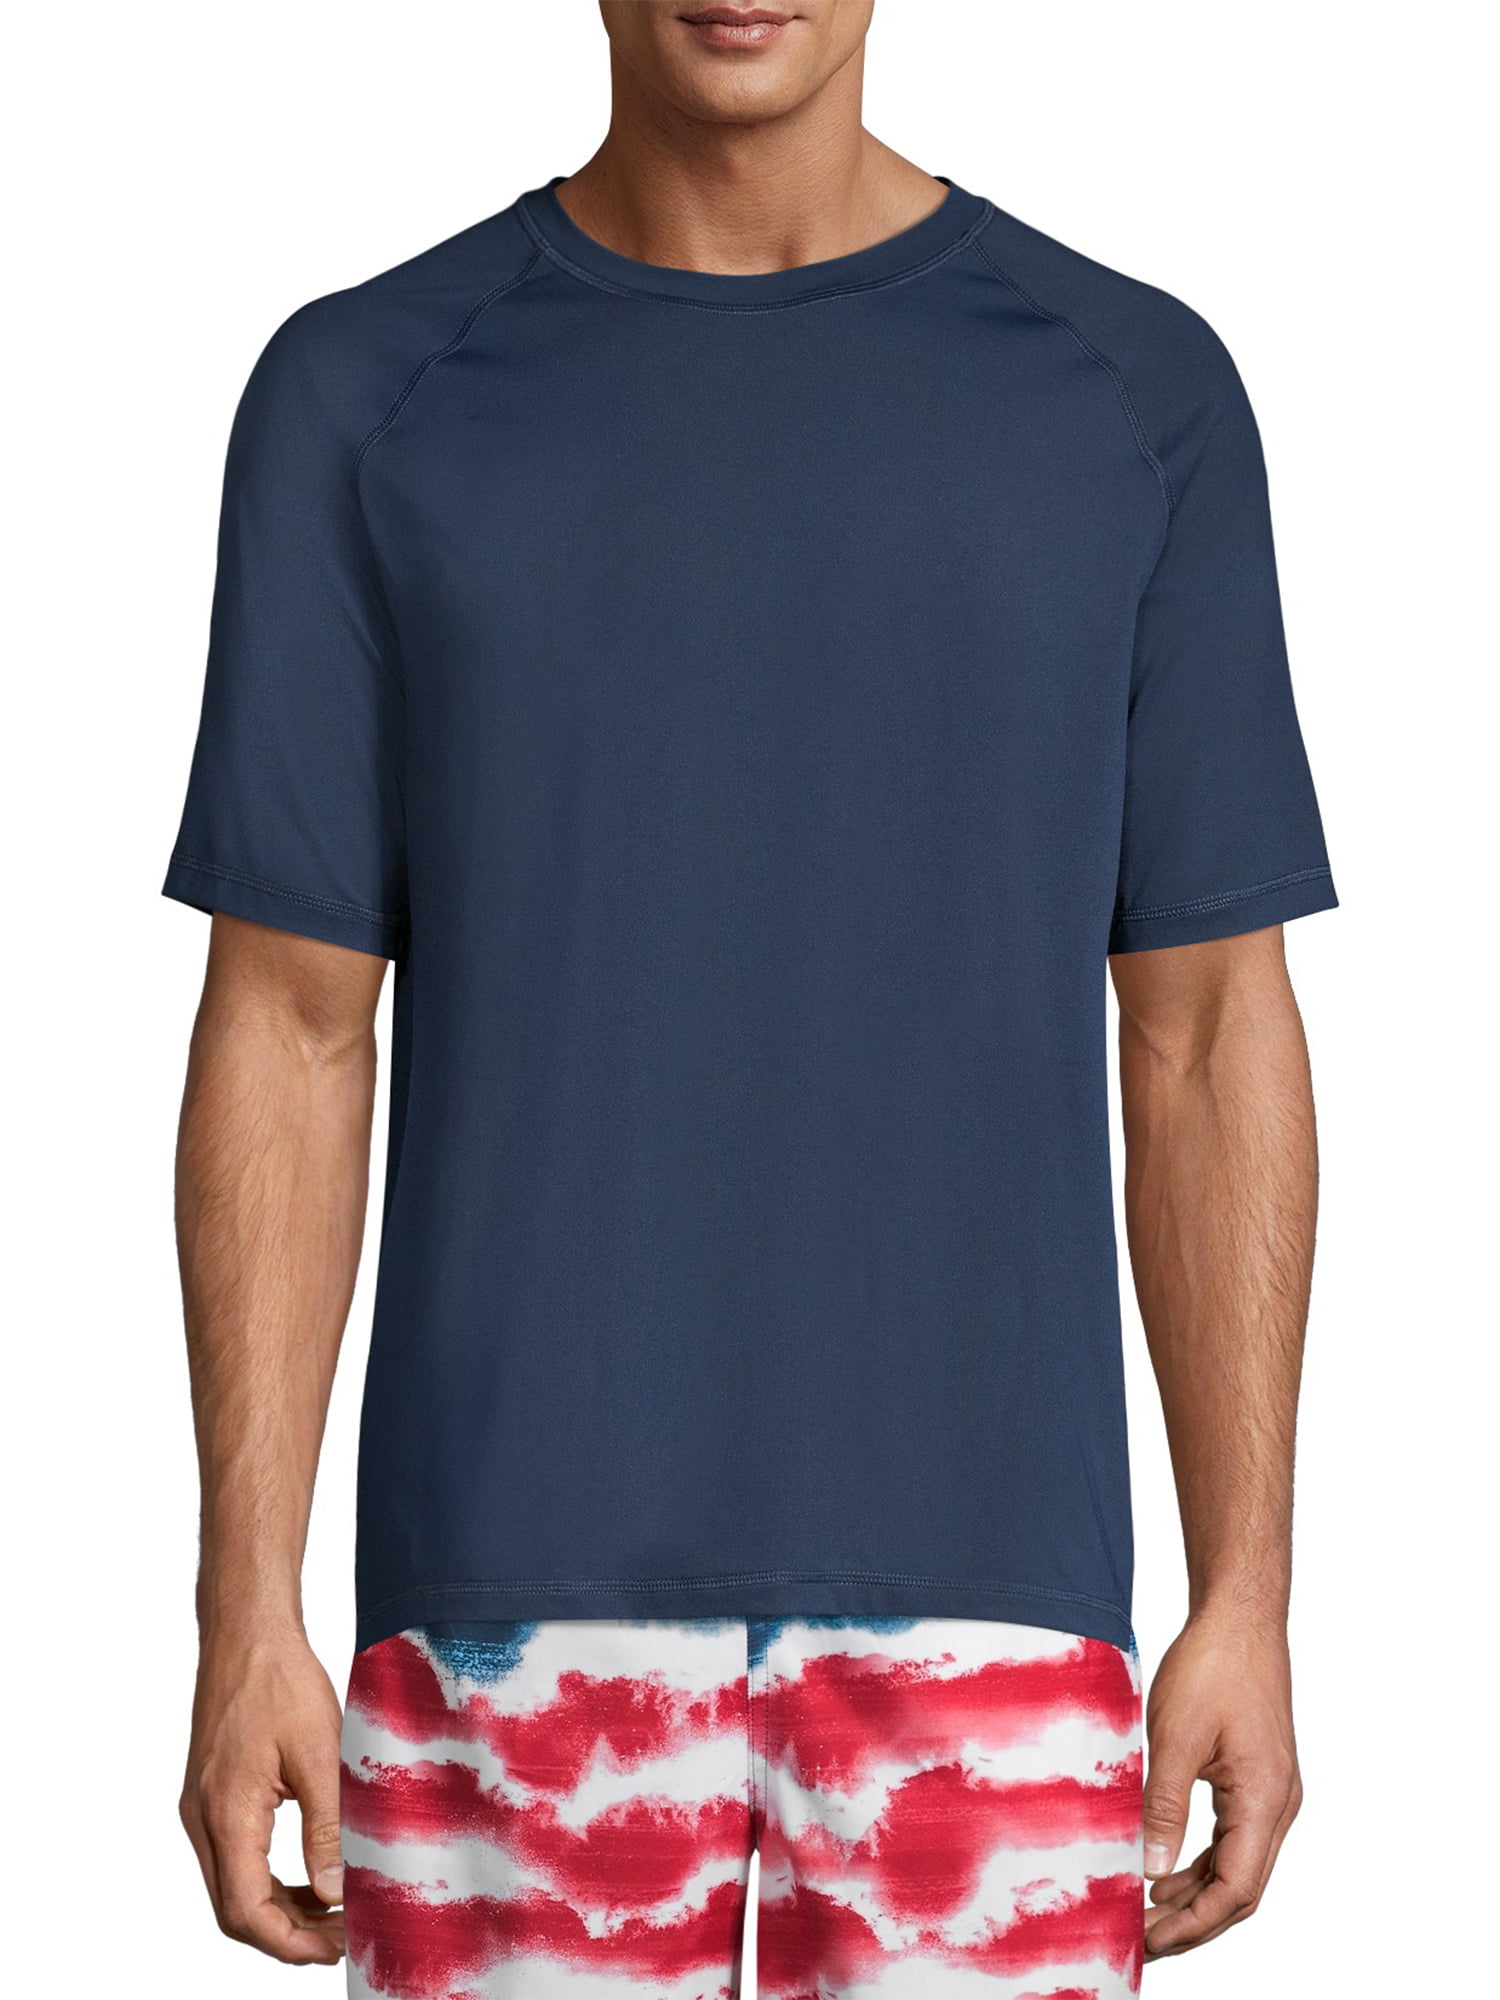 Liberty Imports 2-Pack Men's UPF 50+ Short Sleeve Rash Guard Swim Shirts  (Set A, Small)